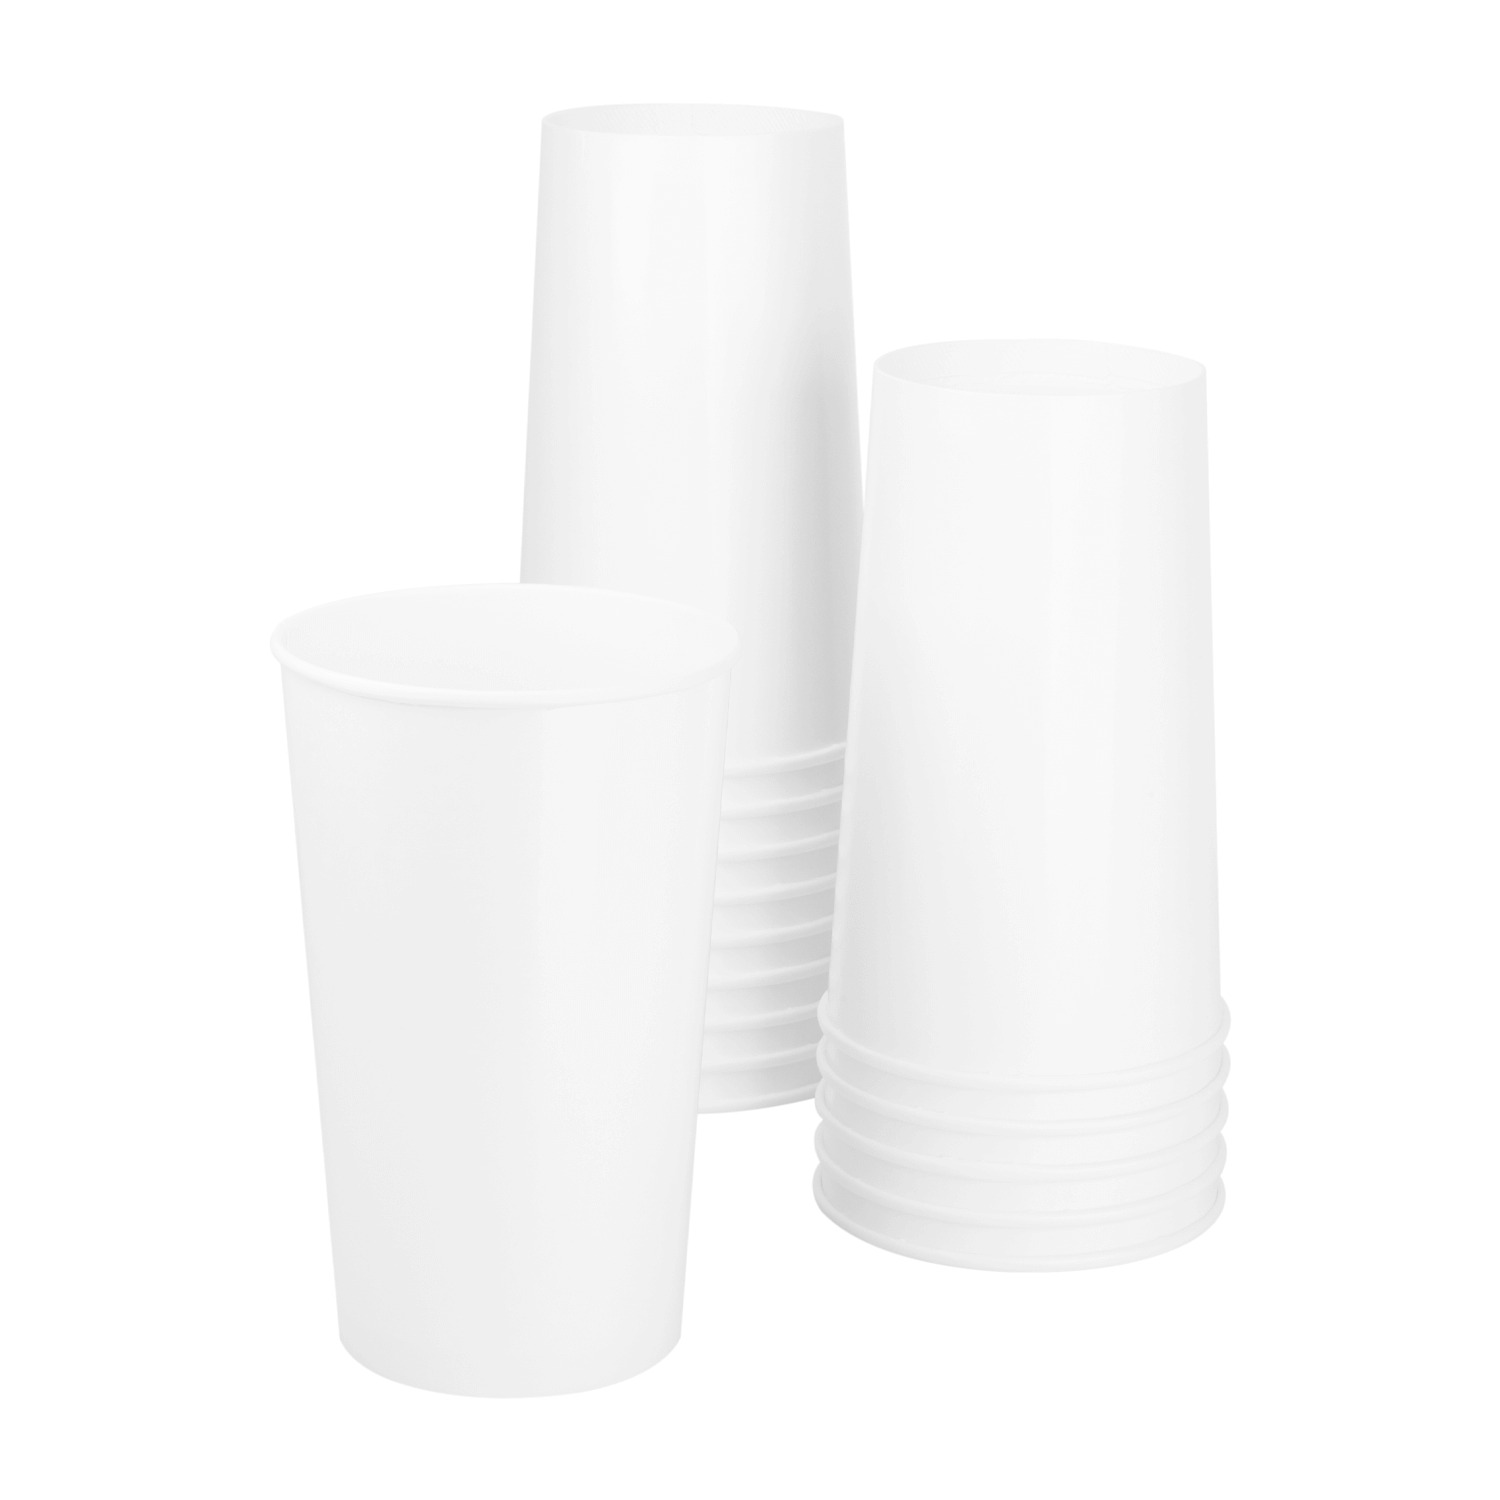 Karat 44 oz Cold Paper Cup - White (115mm) - 480 ct, X44WHIT